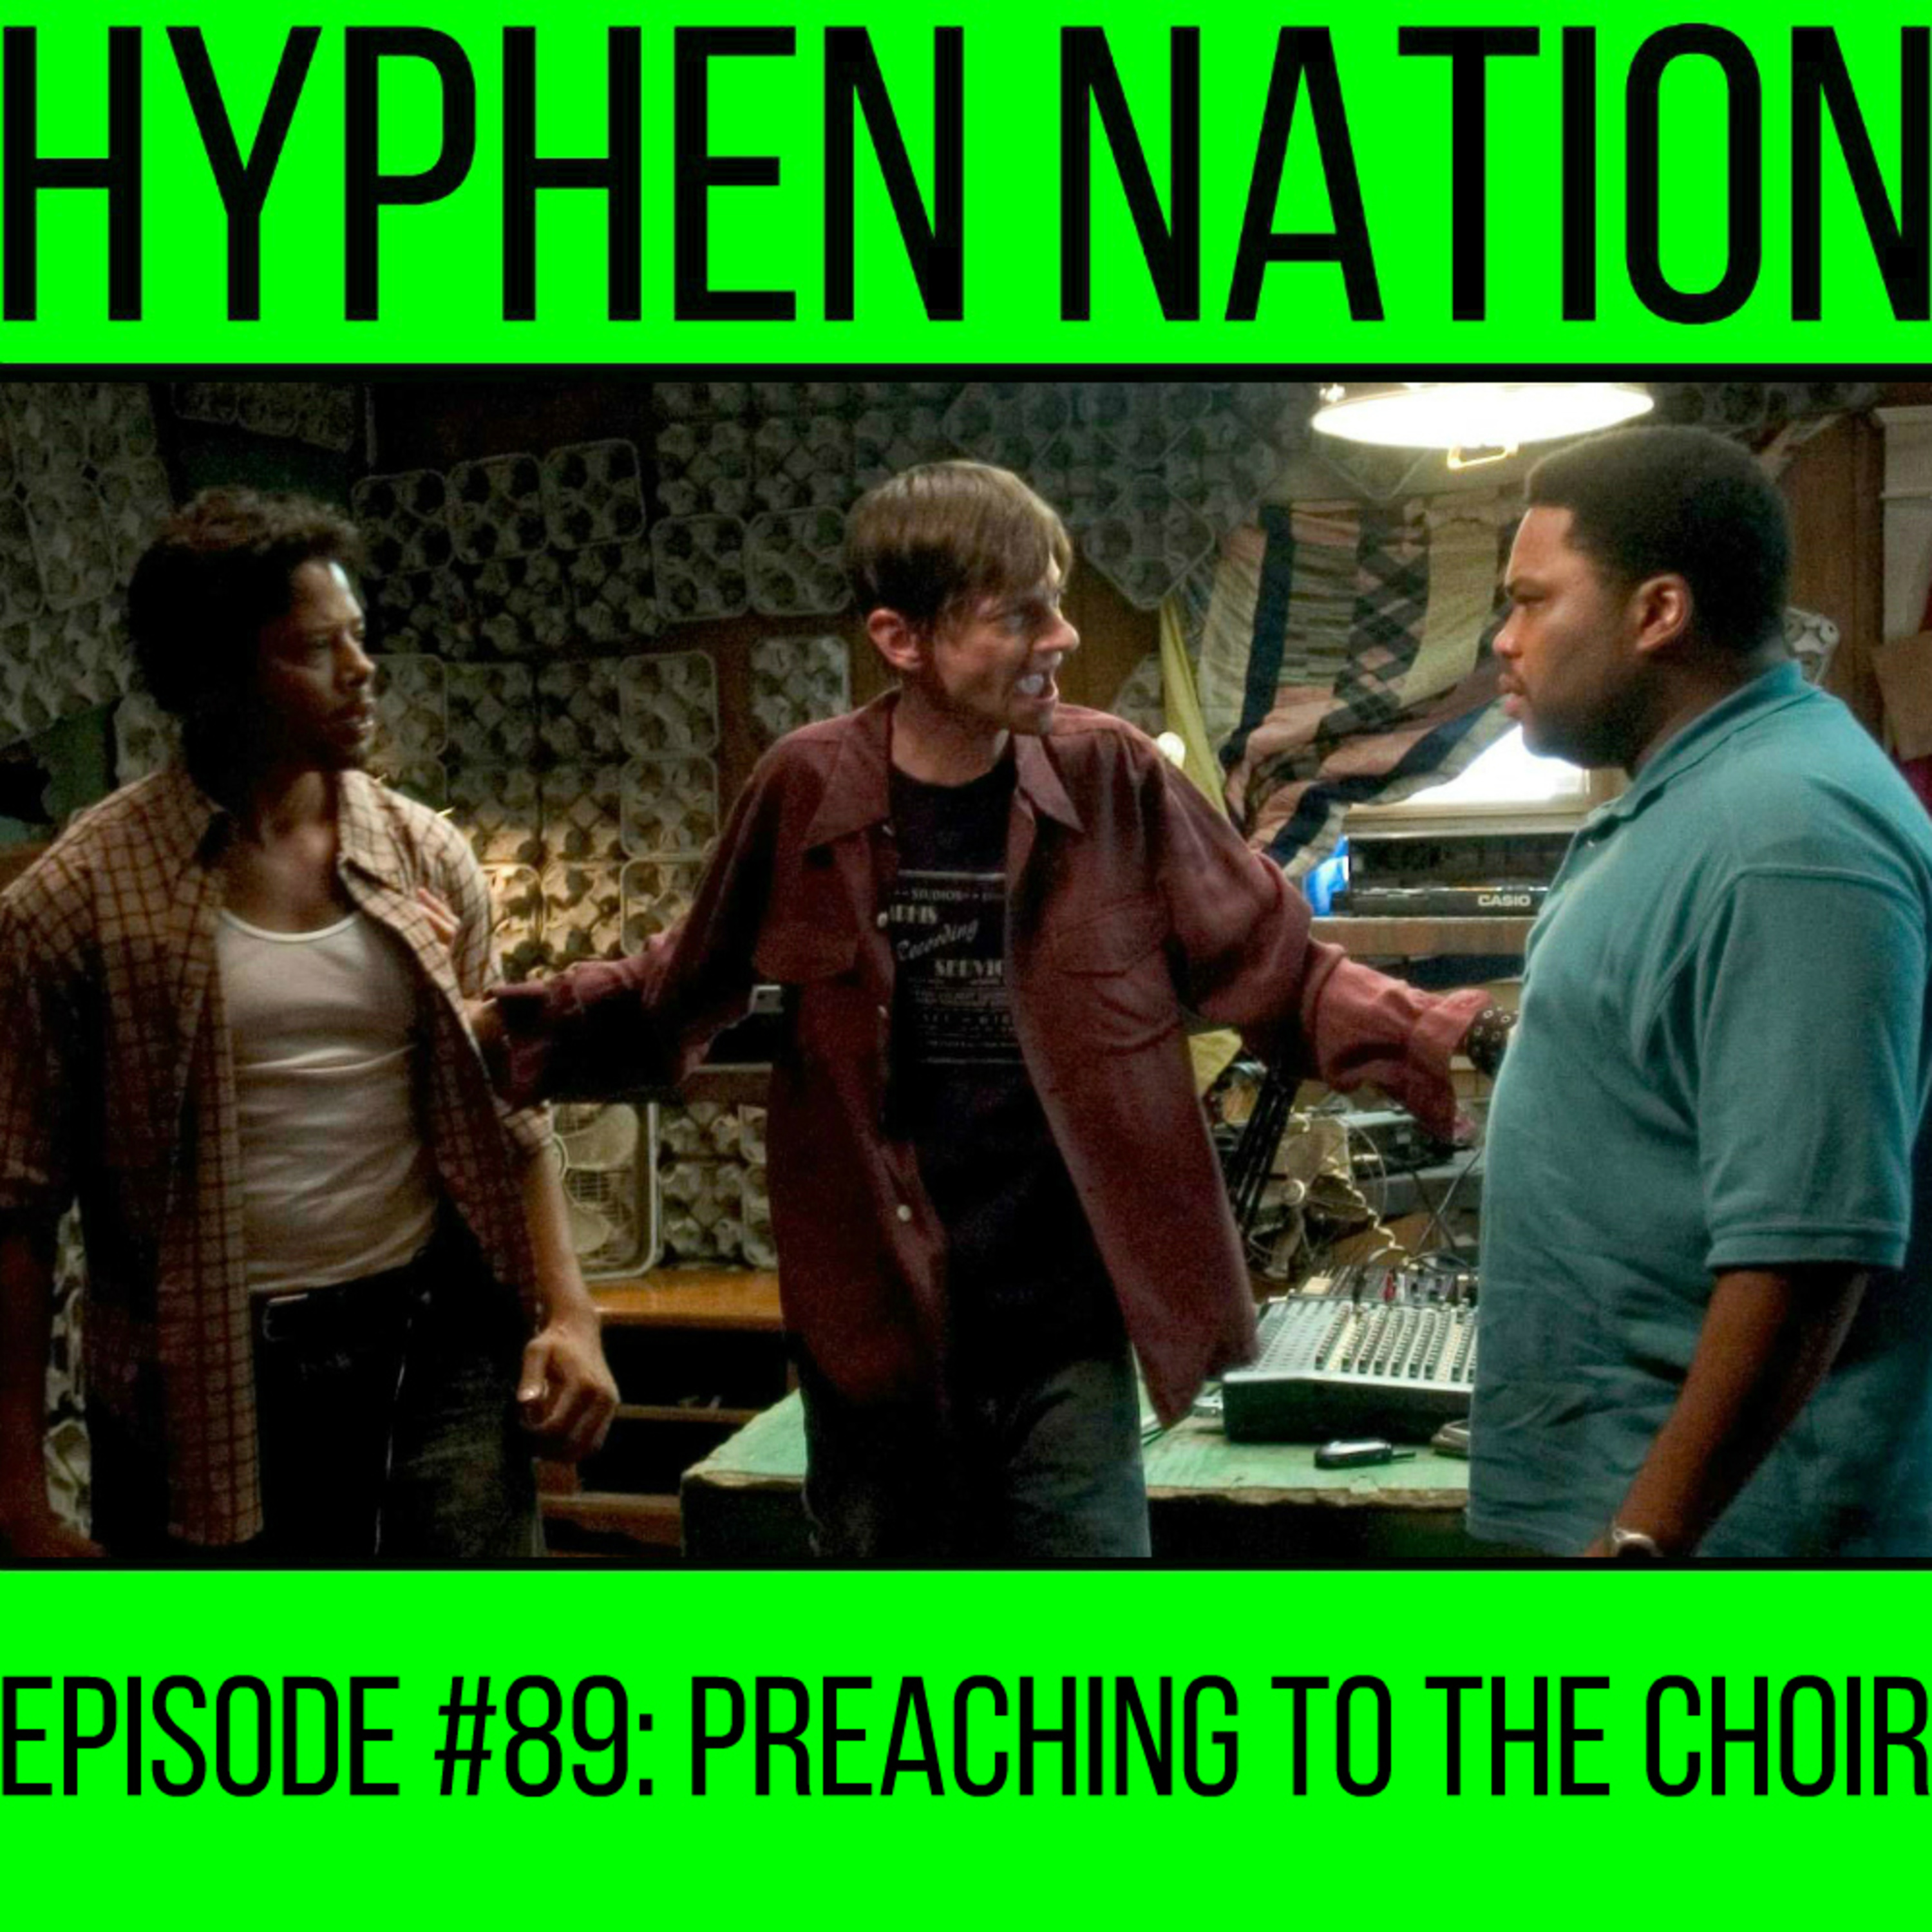 Episode #89: Preaching To The Choir